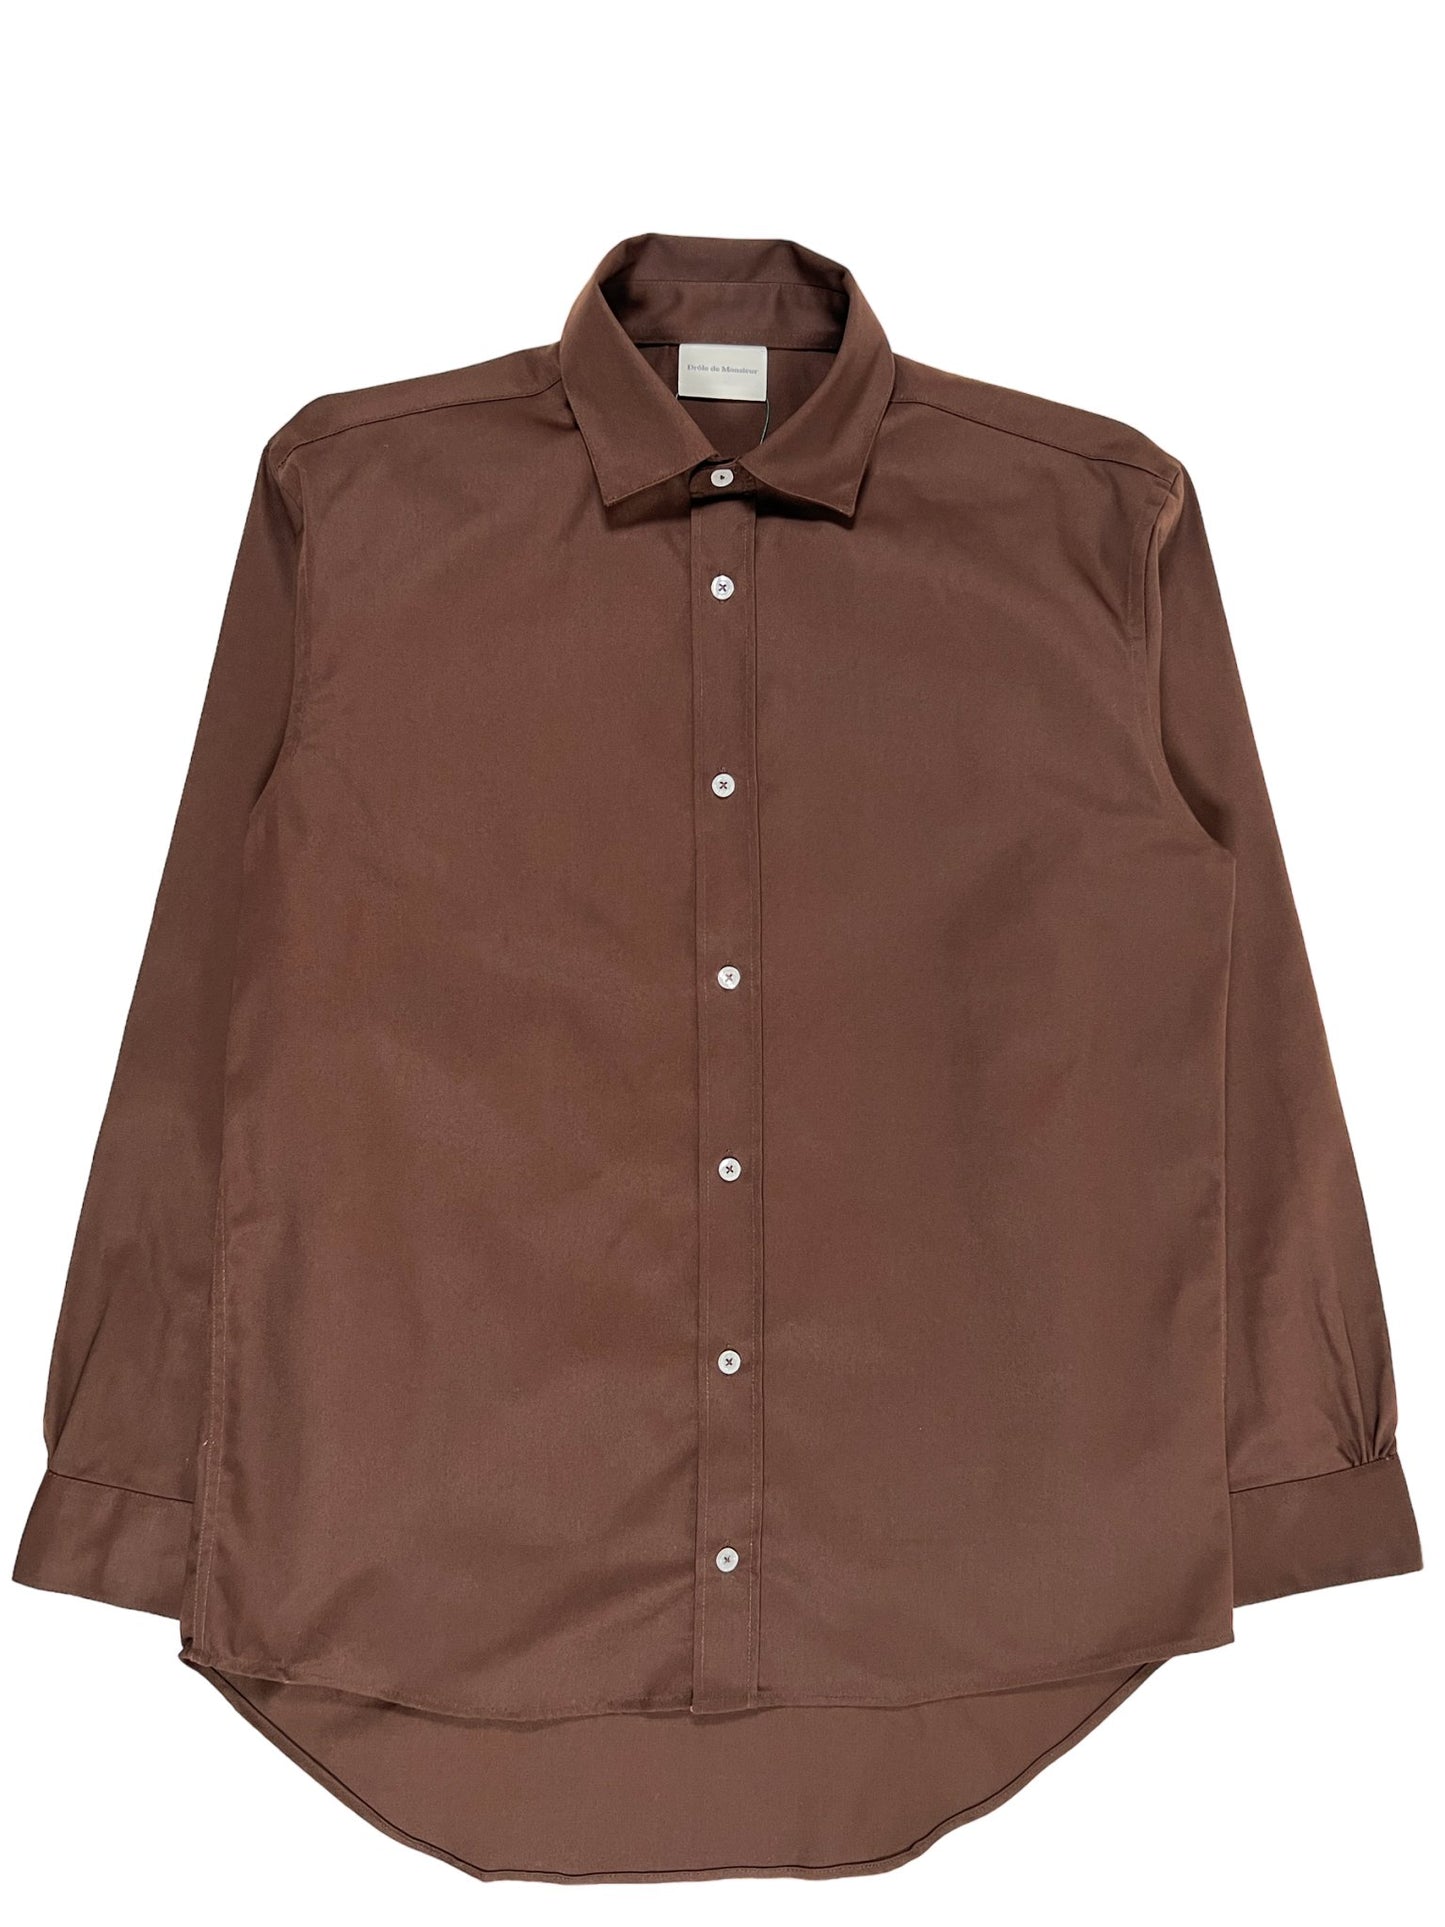 A DROLE DE MONSIEUR button-down brown shirt on a white background.